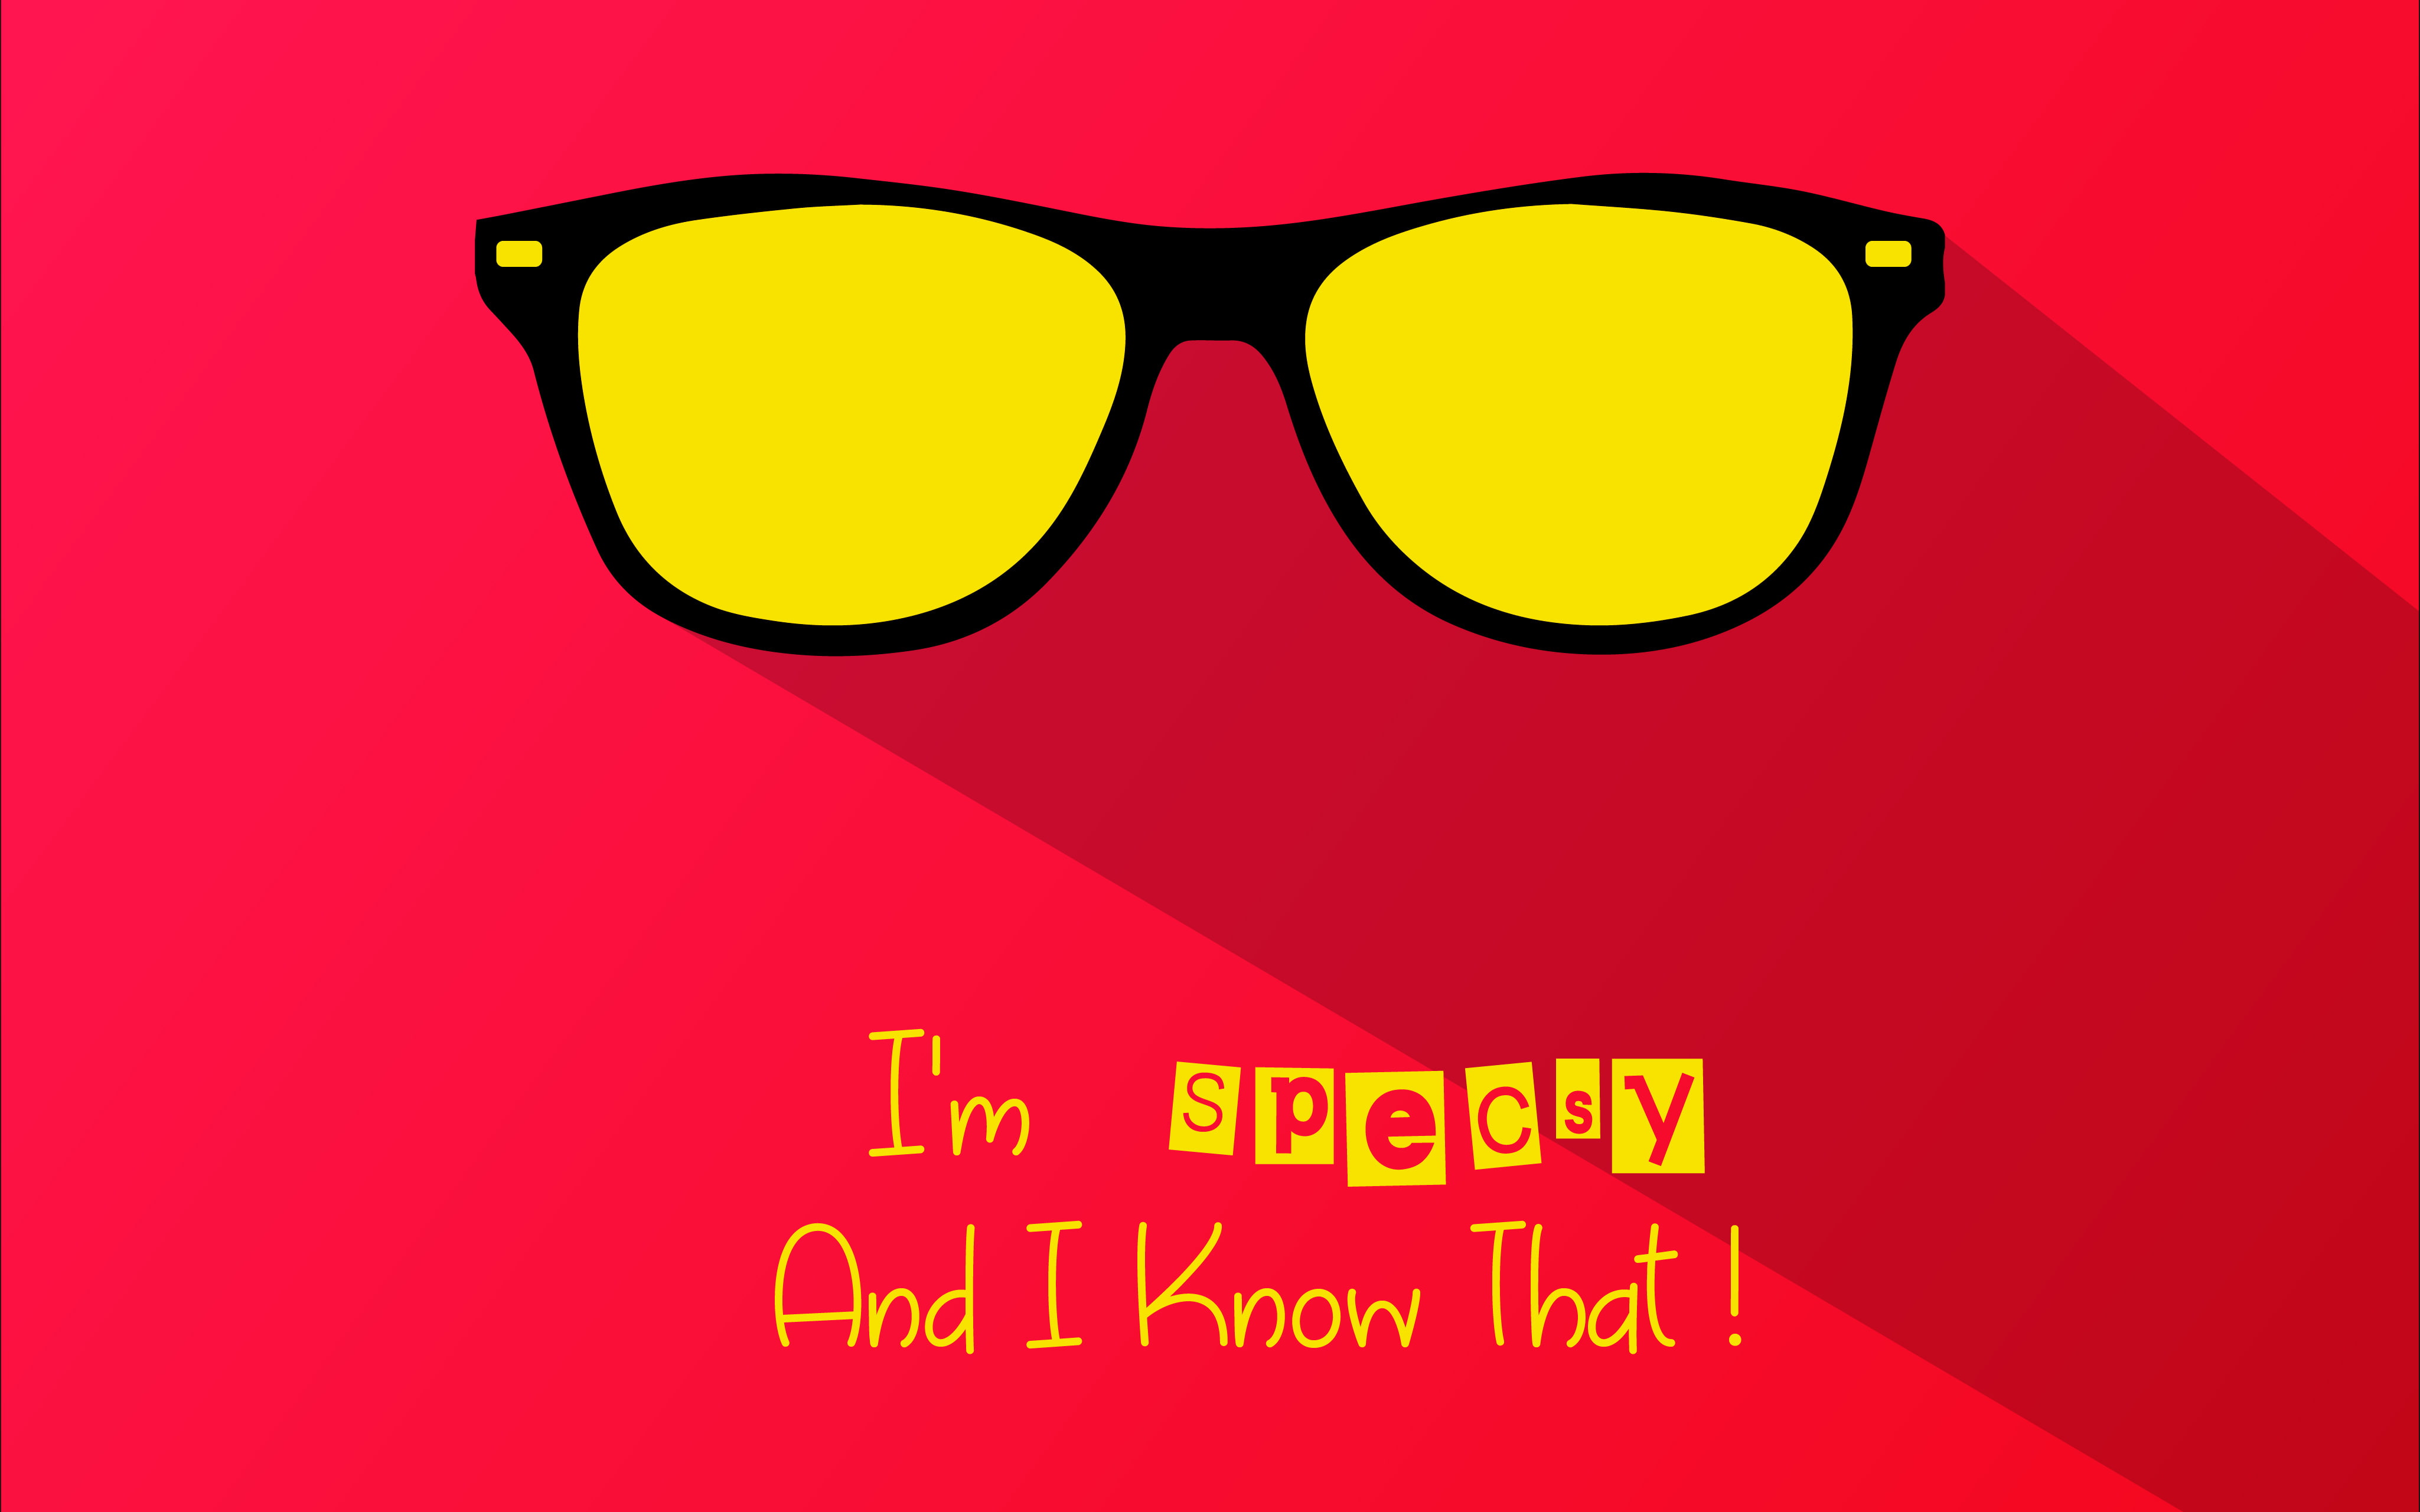 Specsy Quote, fashion, glasses, yellow, sunglasses, colored background